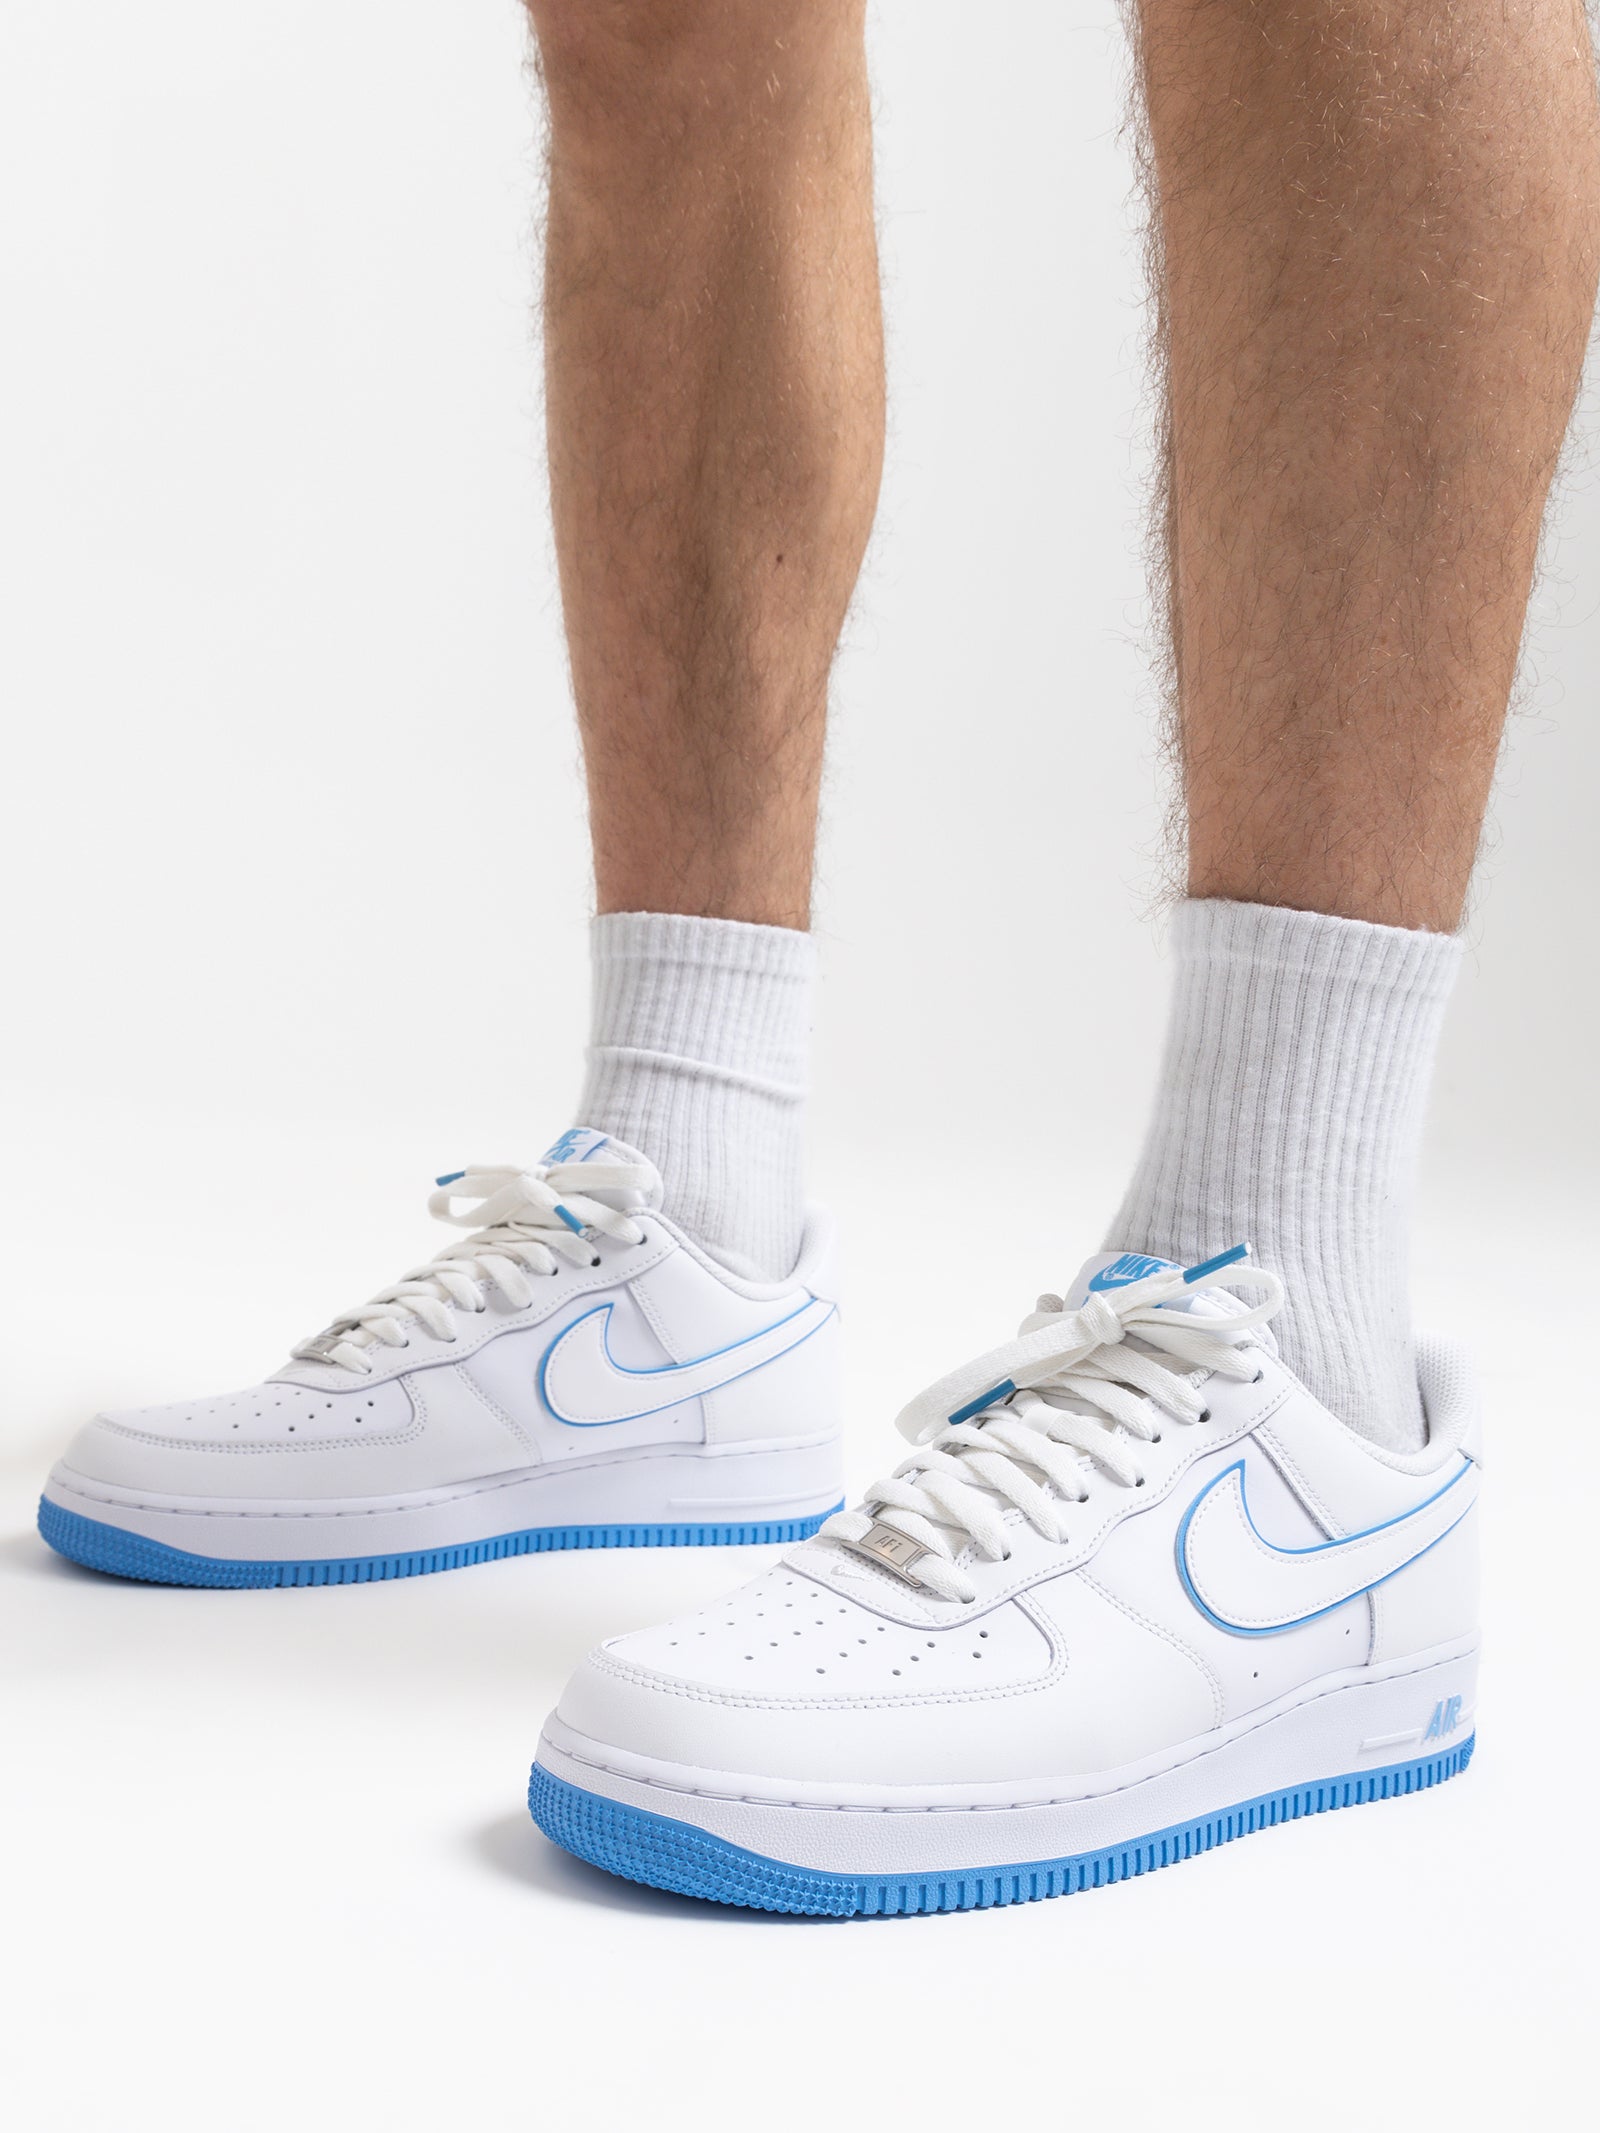 Mens Nike Air Force 1' Sneakers in White & University Blue